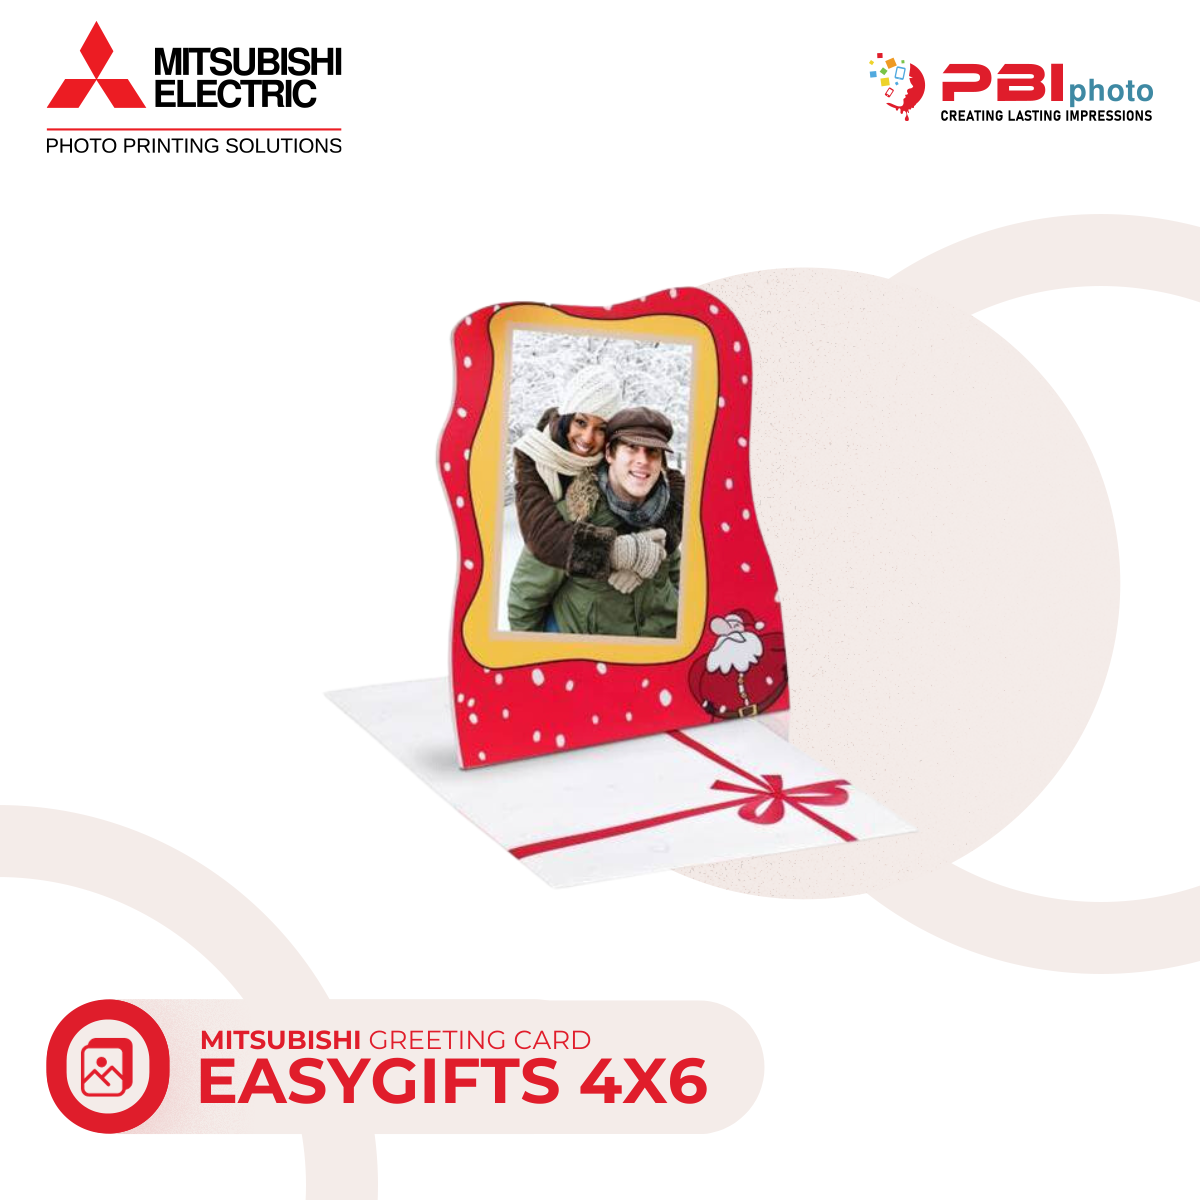 PHOTO BOX EASYGIFTS 4X6 – PBI Photo